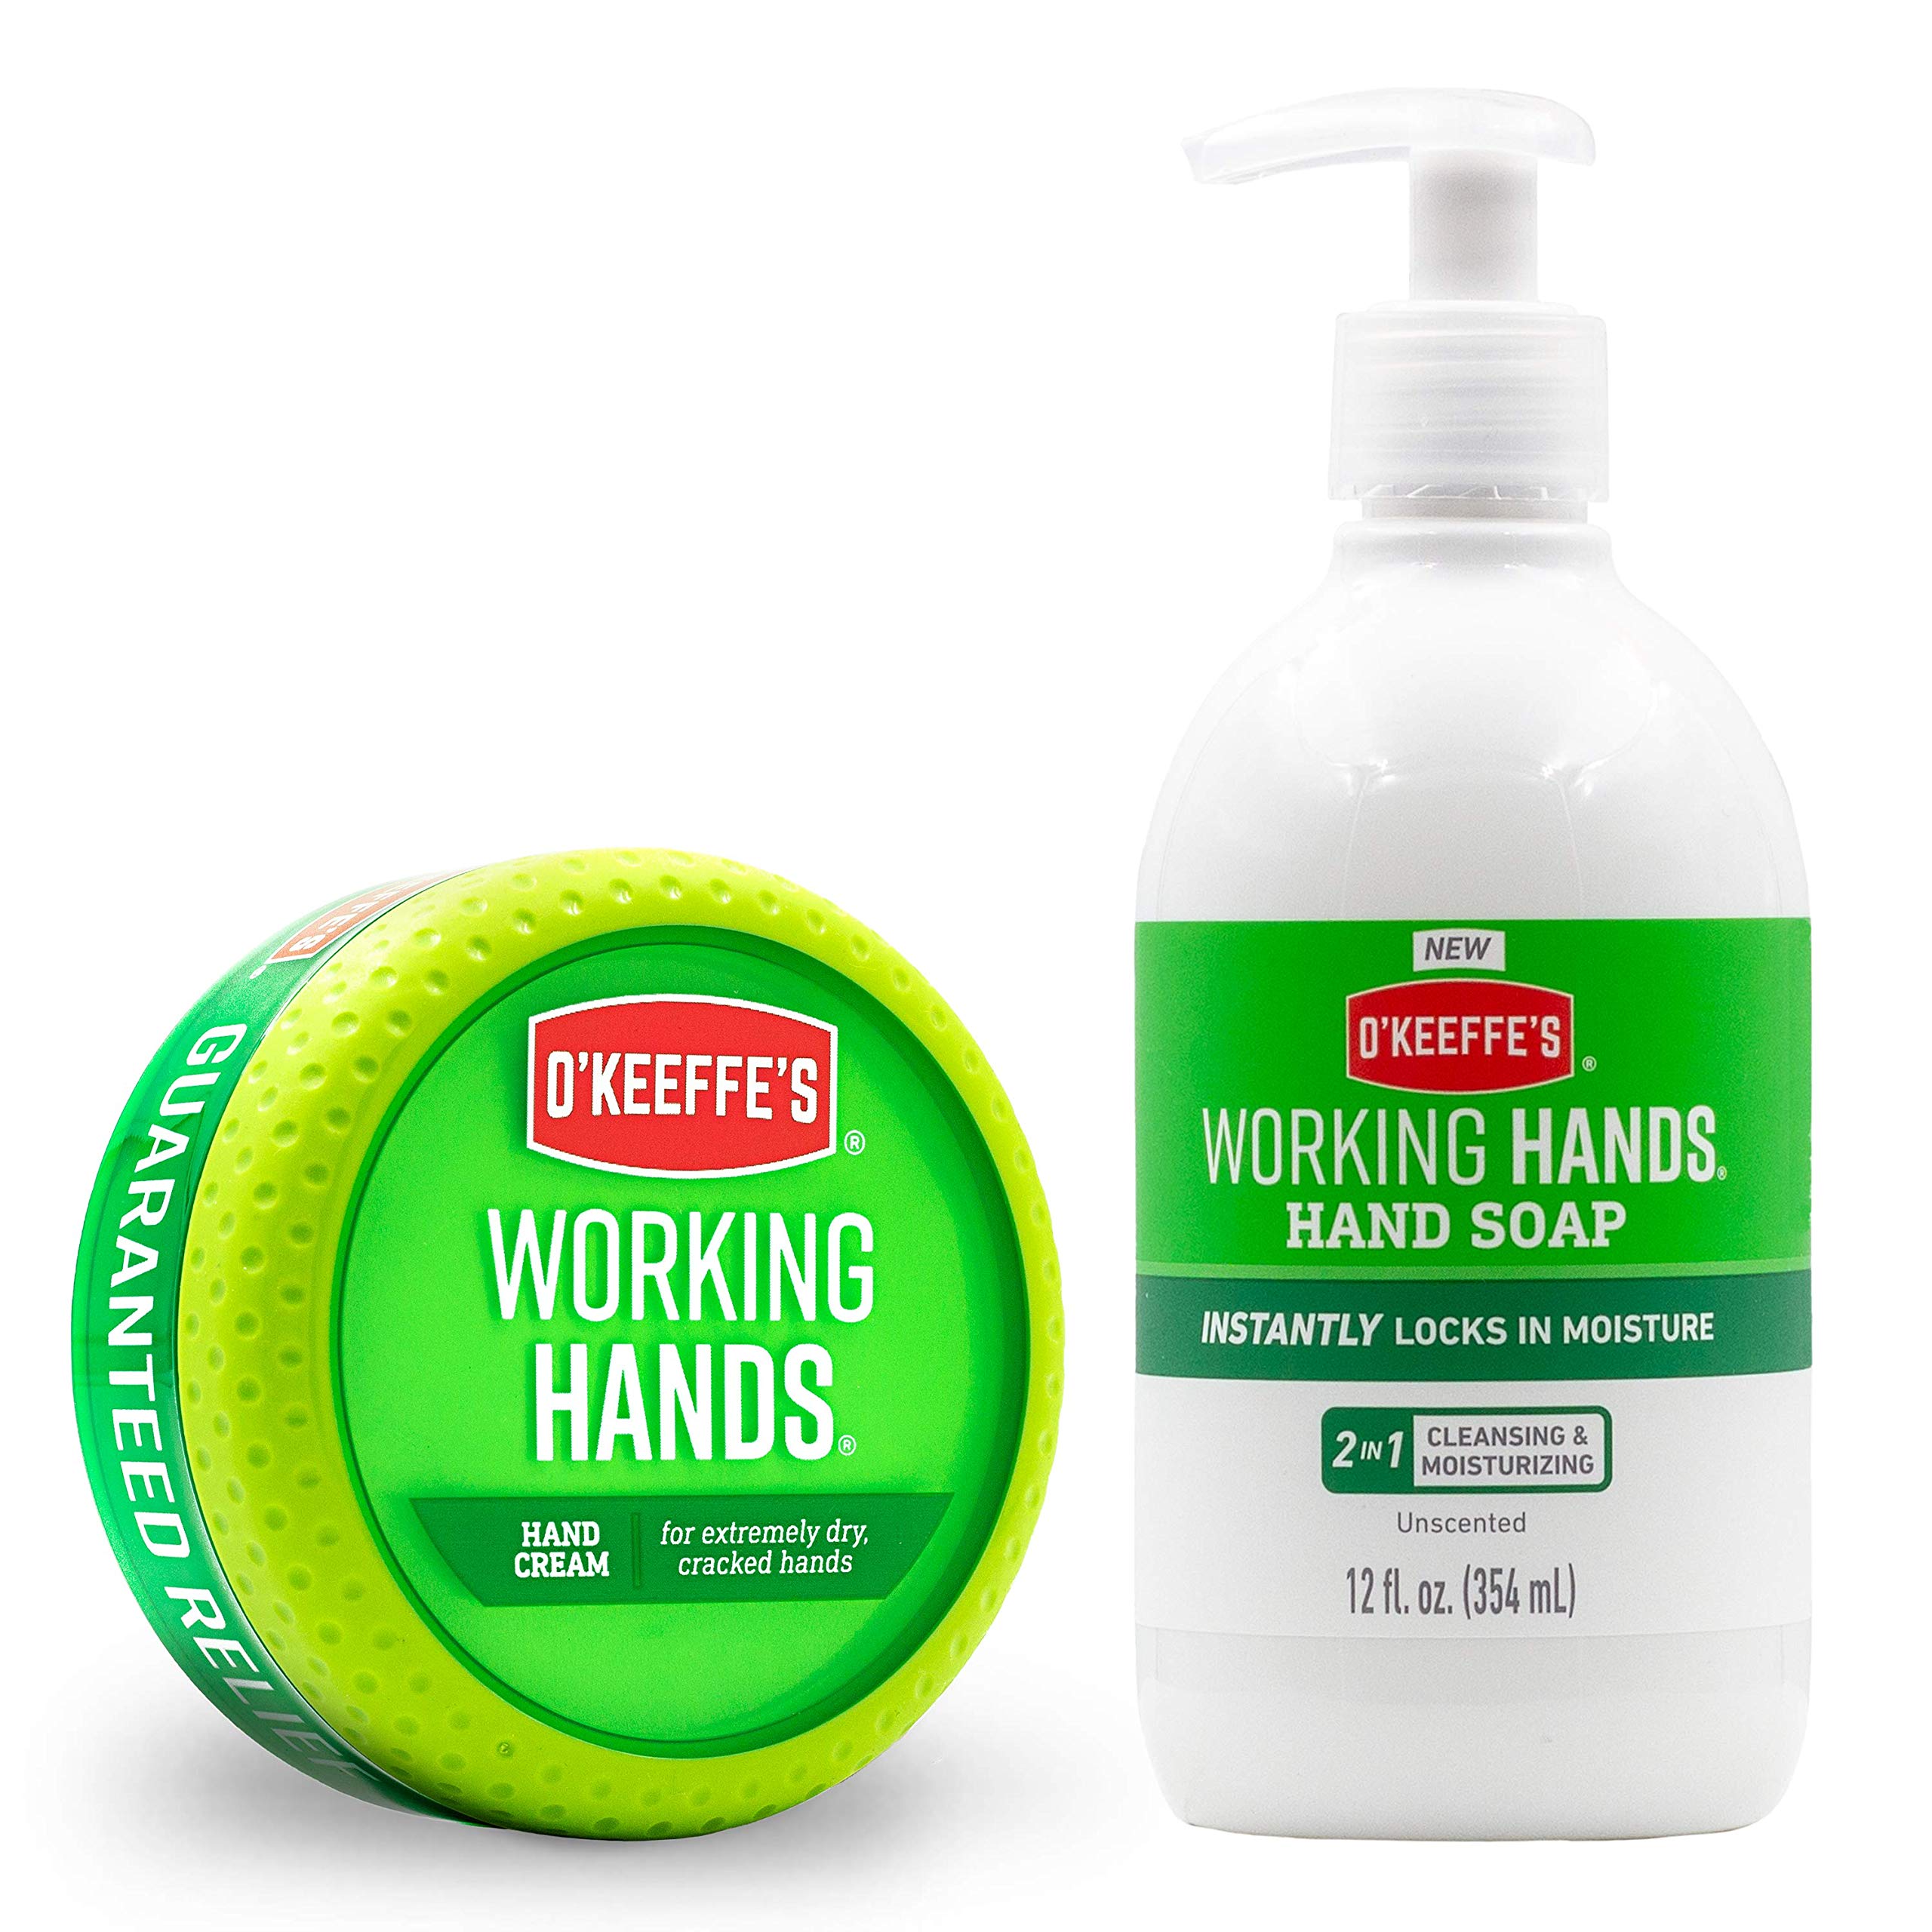 O'Keeffe's Working Hands Hand Cream 3 oz